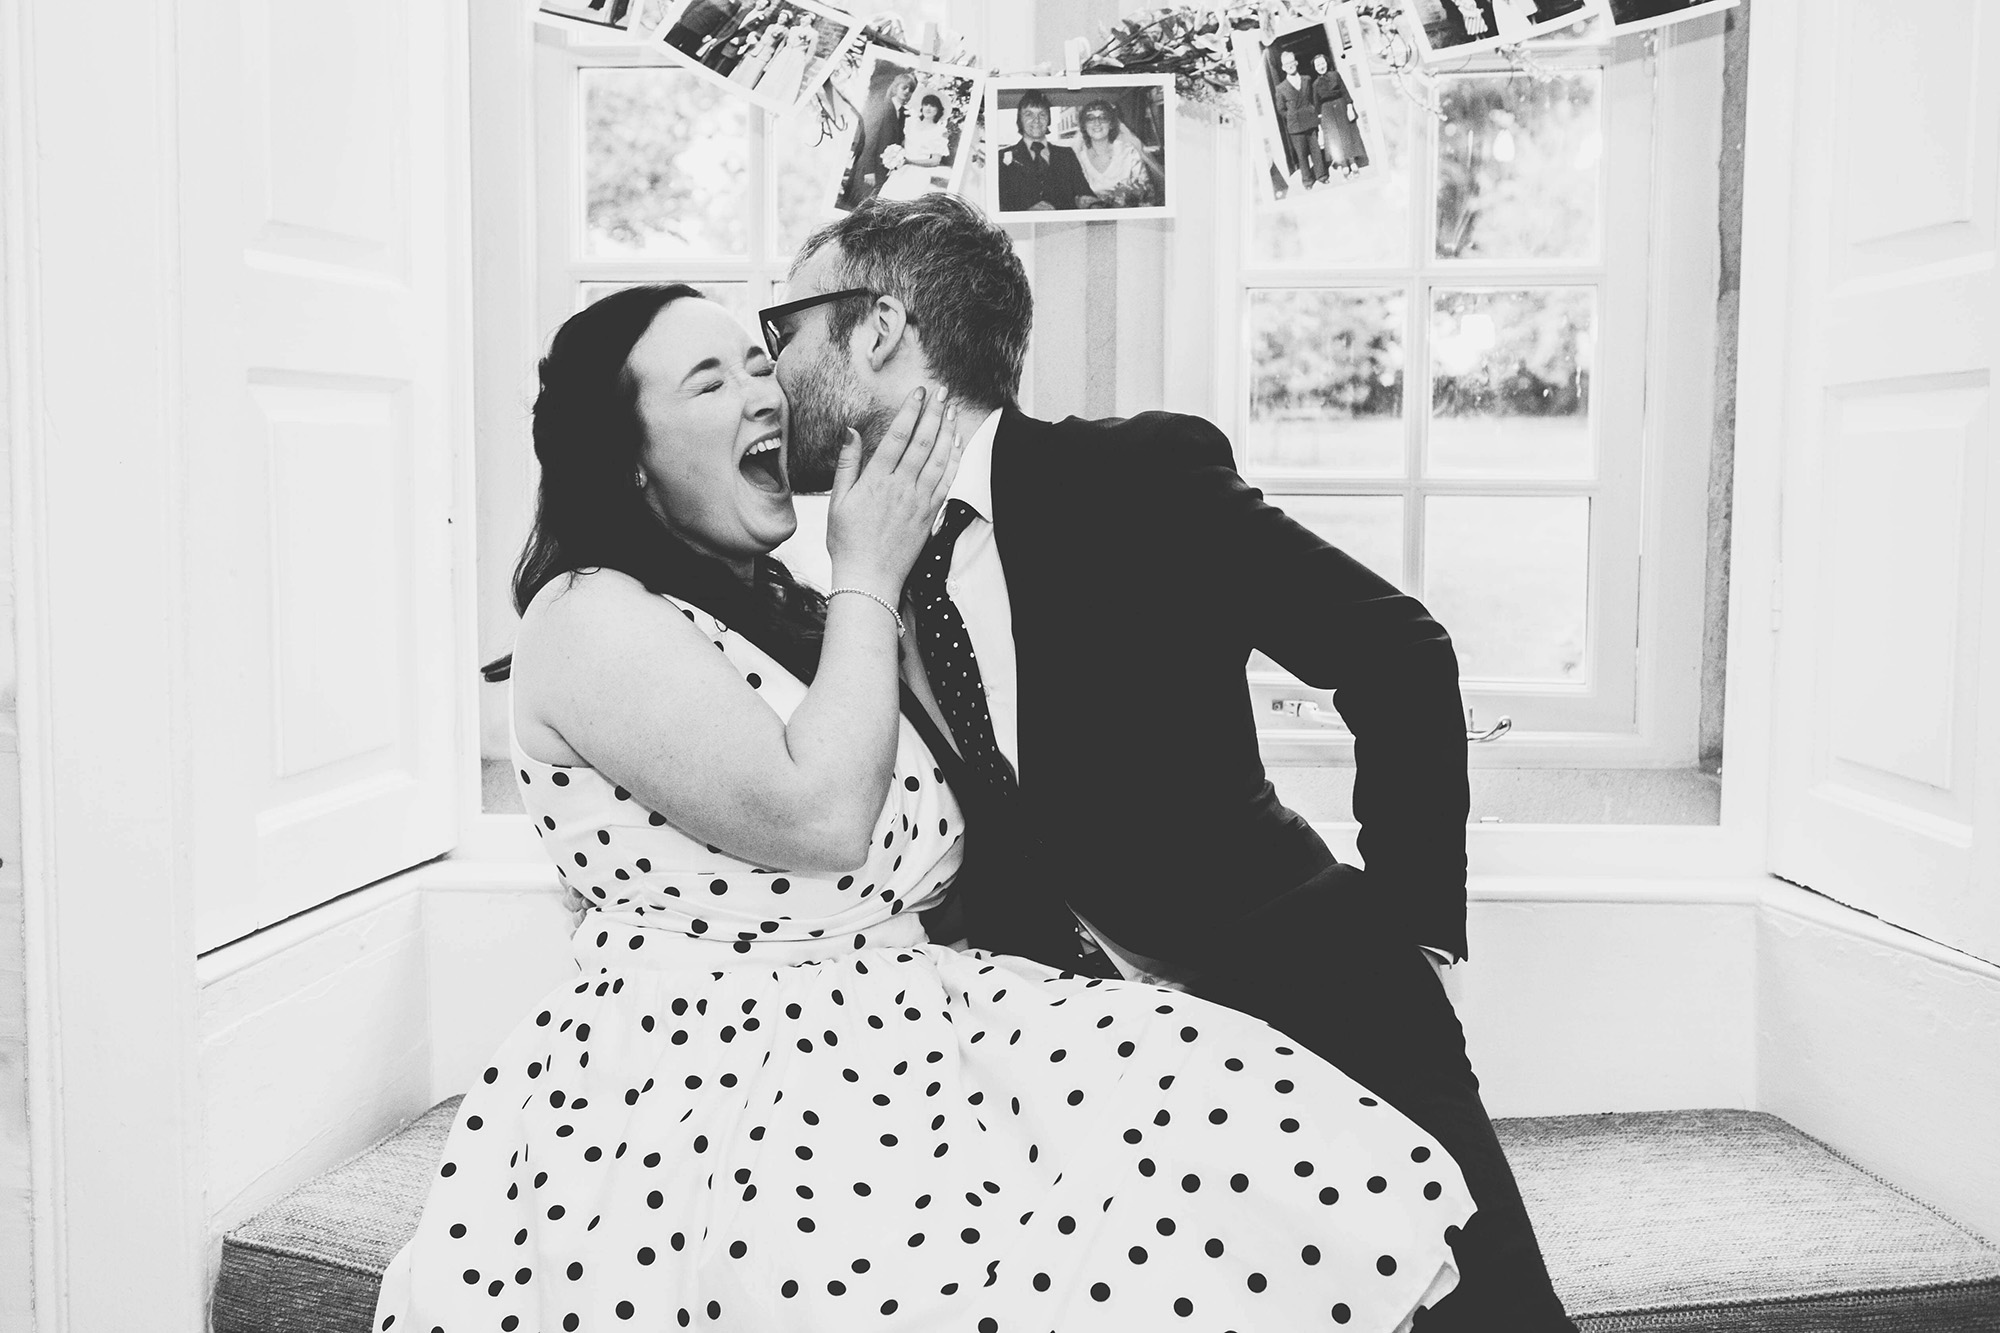 Fun black and white wedding photo by Erika Tanith Photography